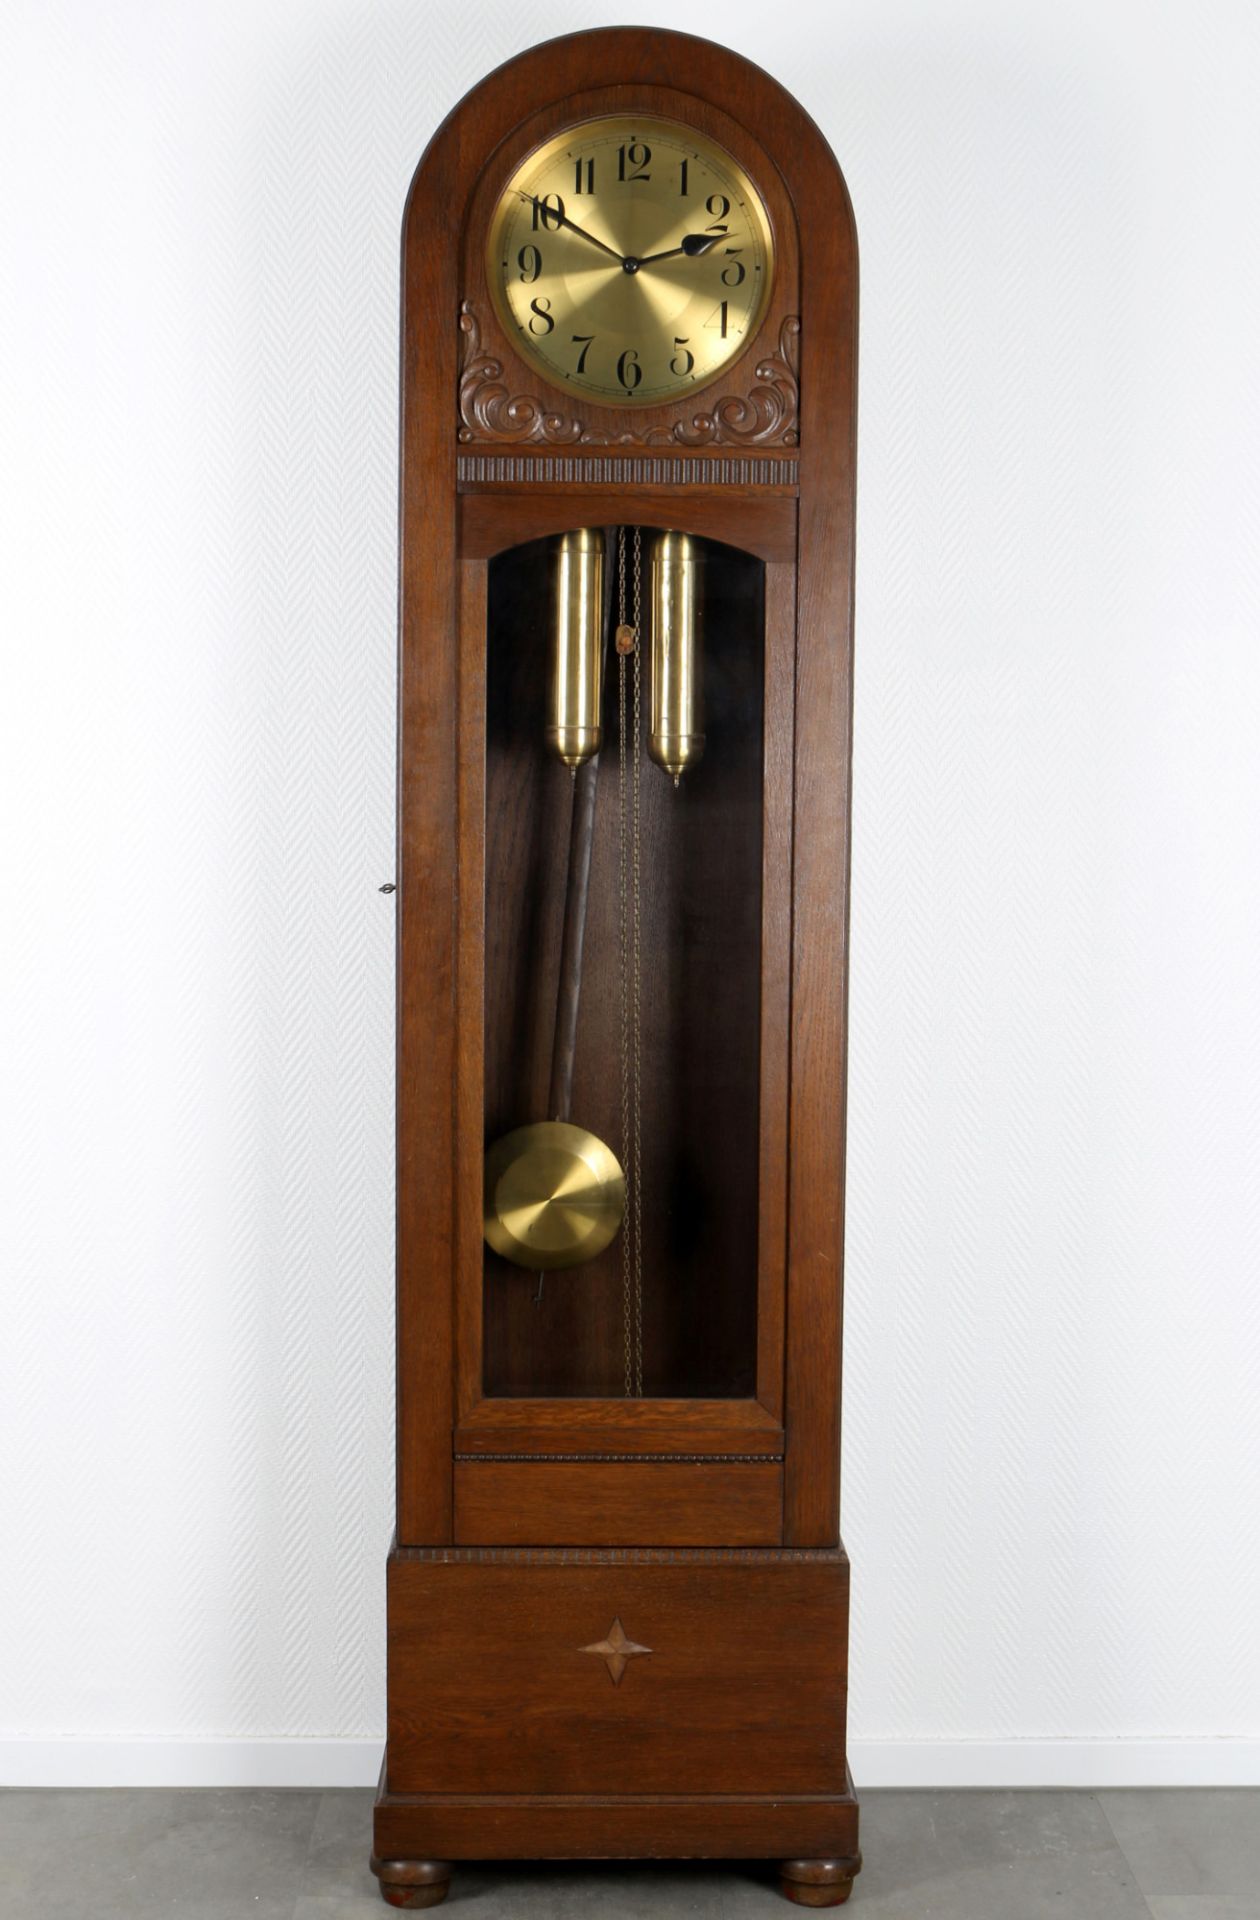 Grandfather clock around 1920, Dufa, Standuhr um 1920,